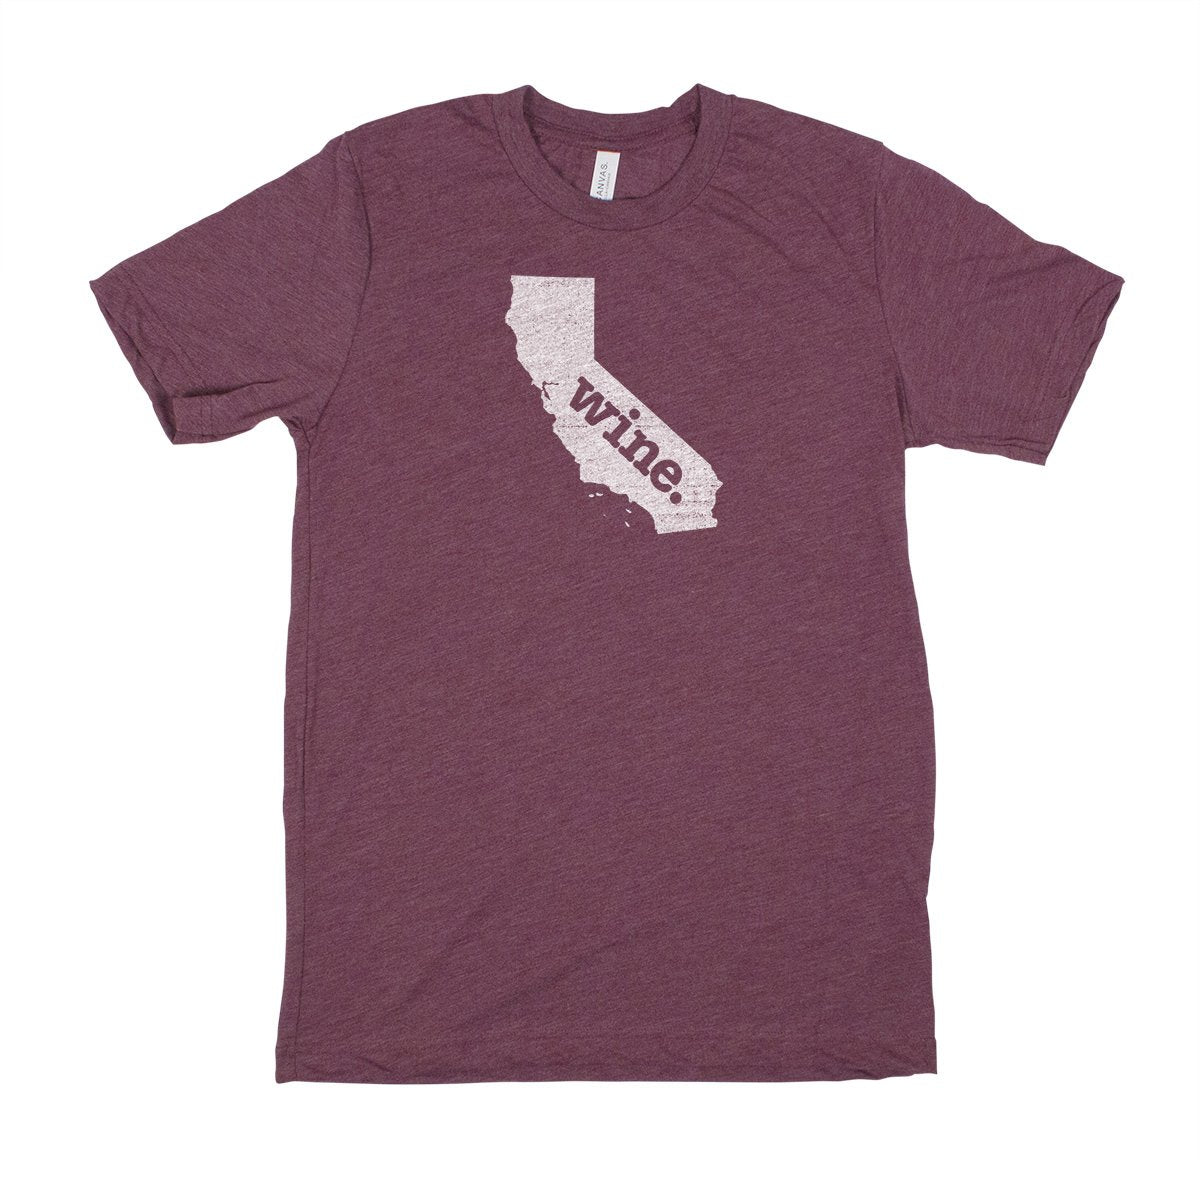 run. Men's Unisex T-Shirt - Wisconsin